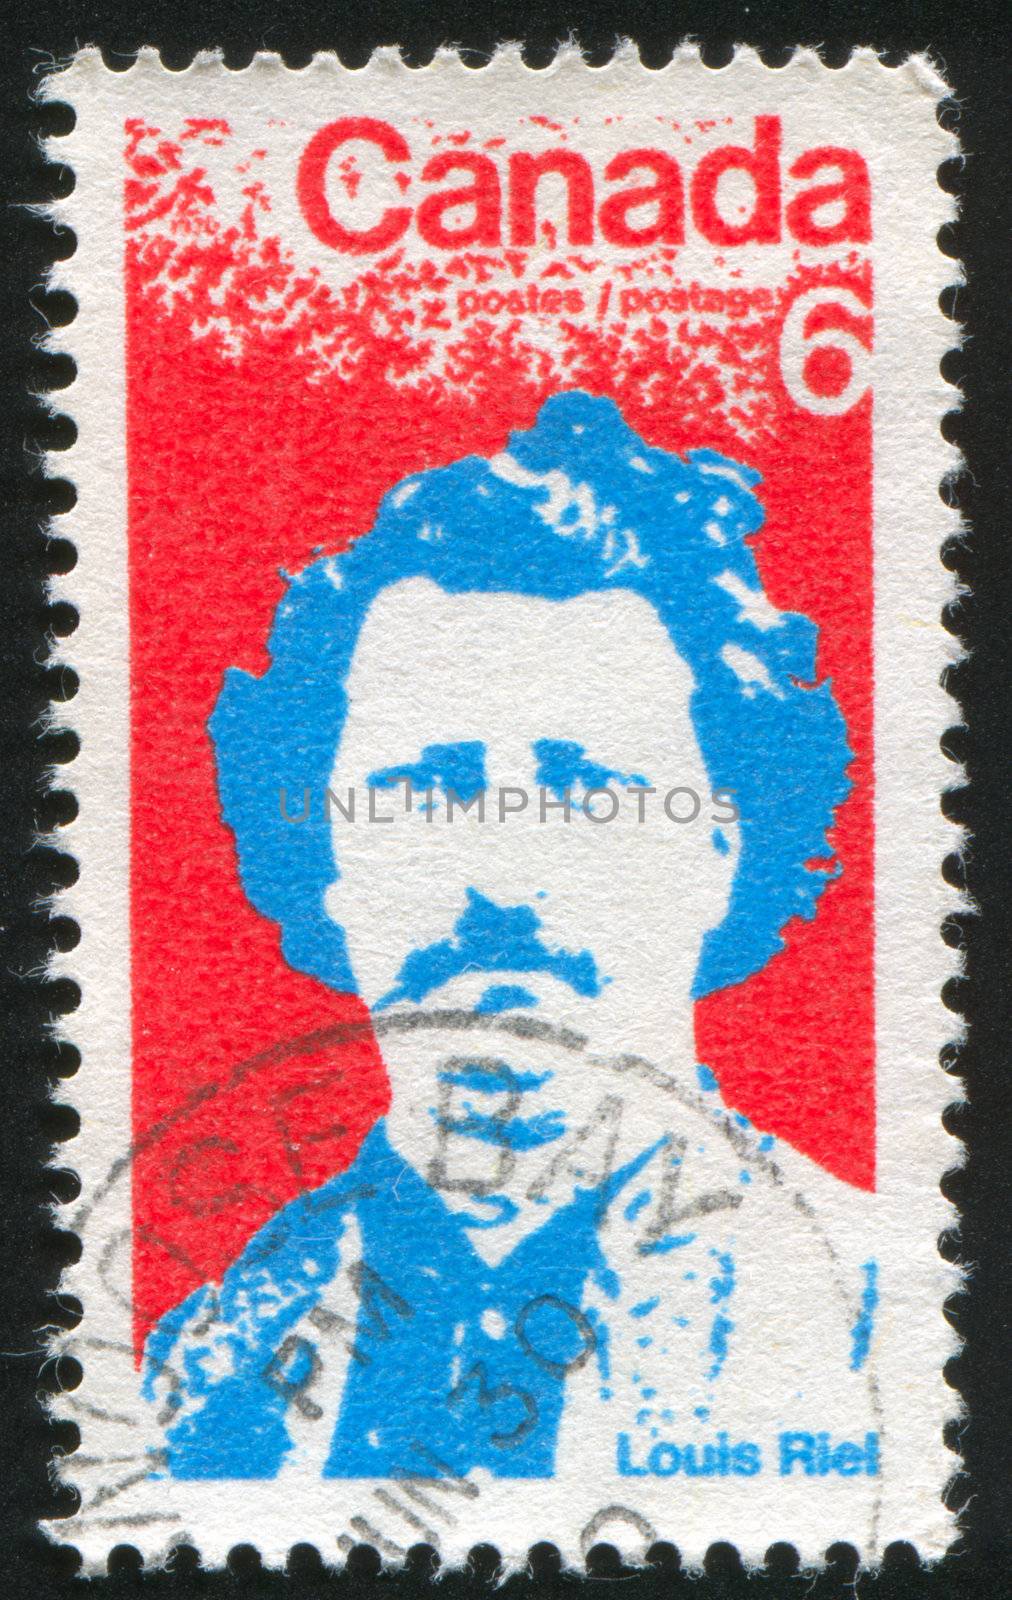 CANADA - CIRCA 1970: stamp printed by Canada, shows Louis Riel, circa 1970